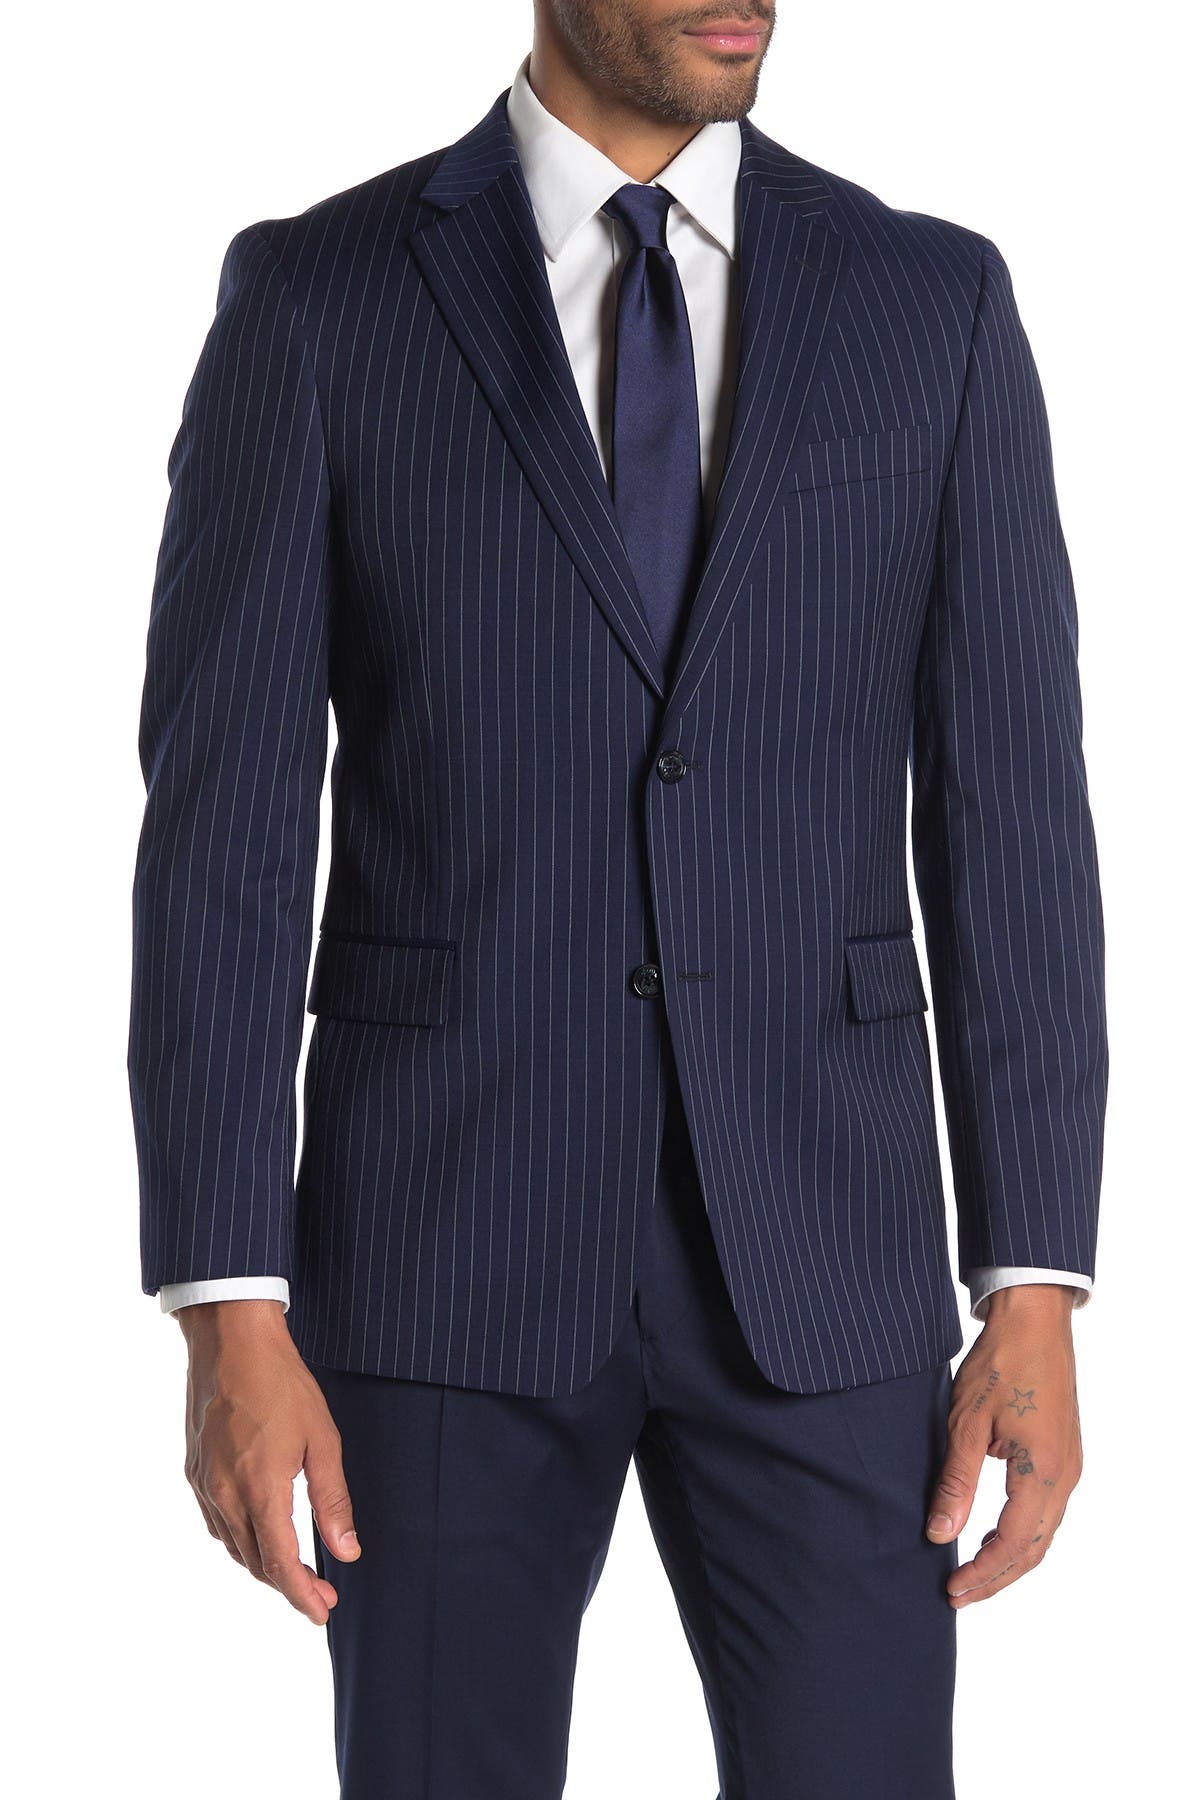 tommy hilfiger pinstripe suit